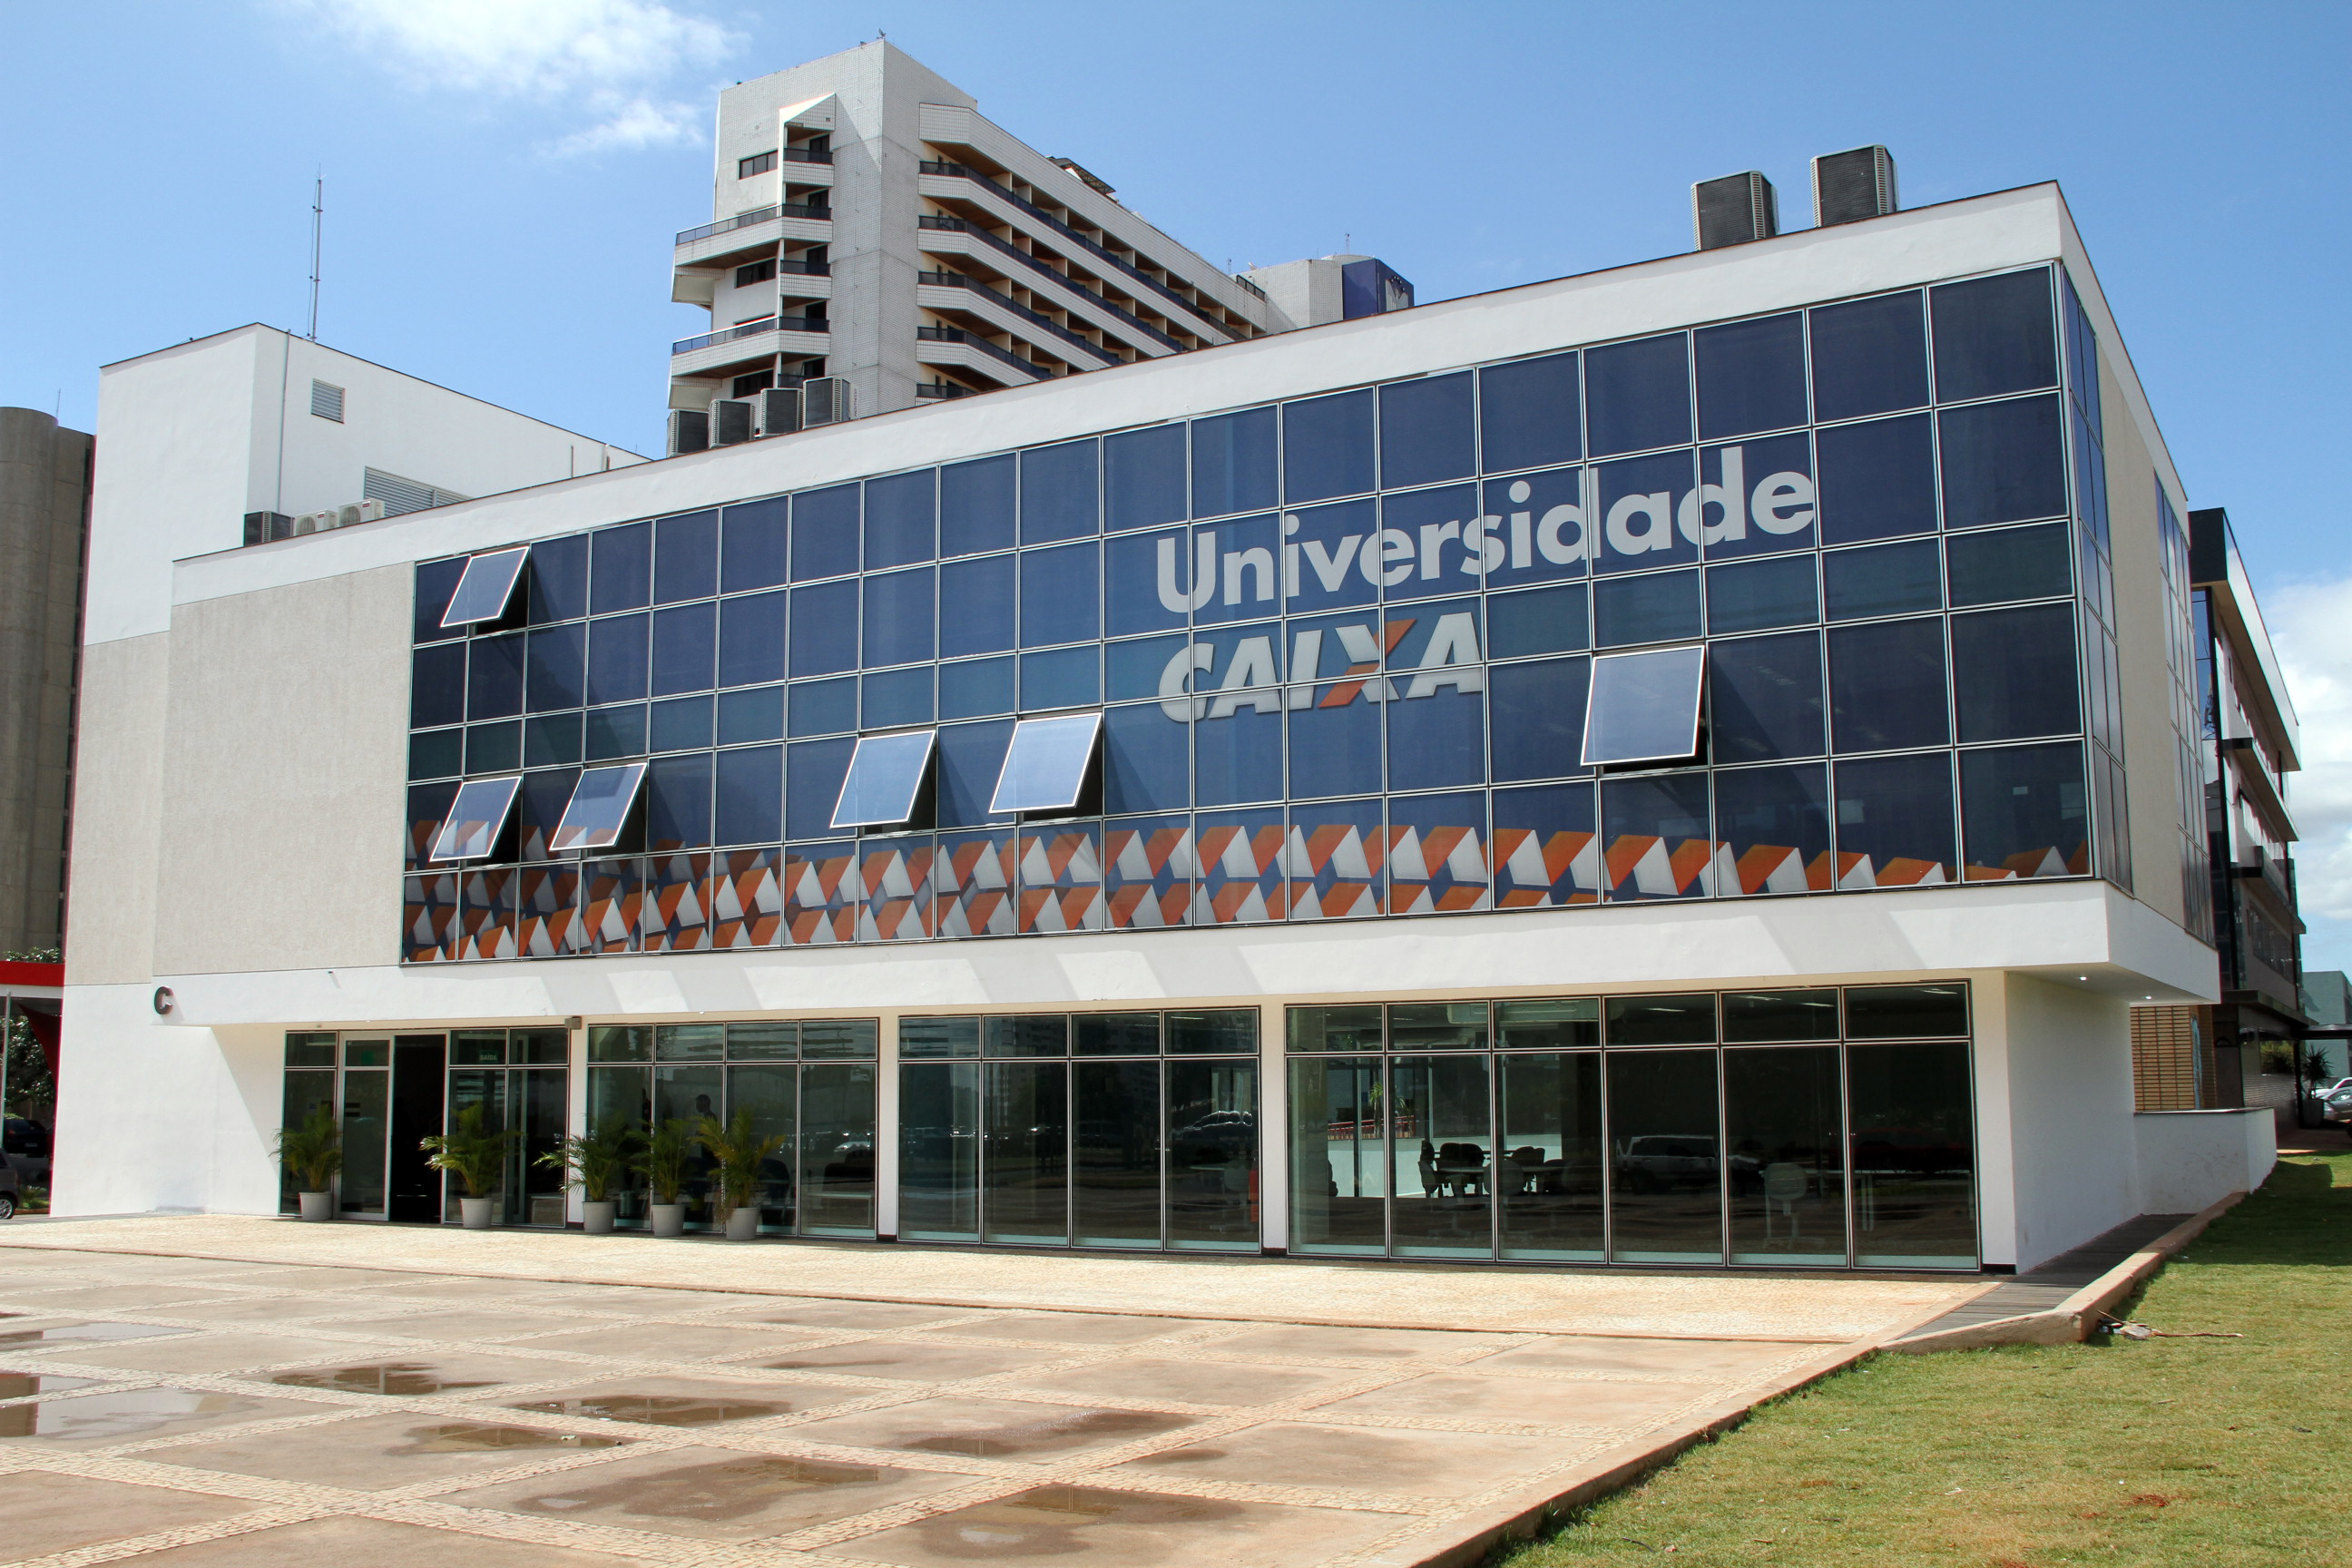 Universidade_caixa_campus_brasilia